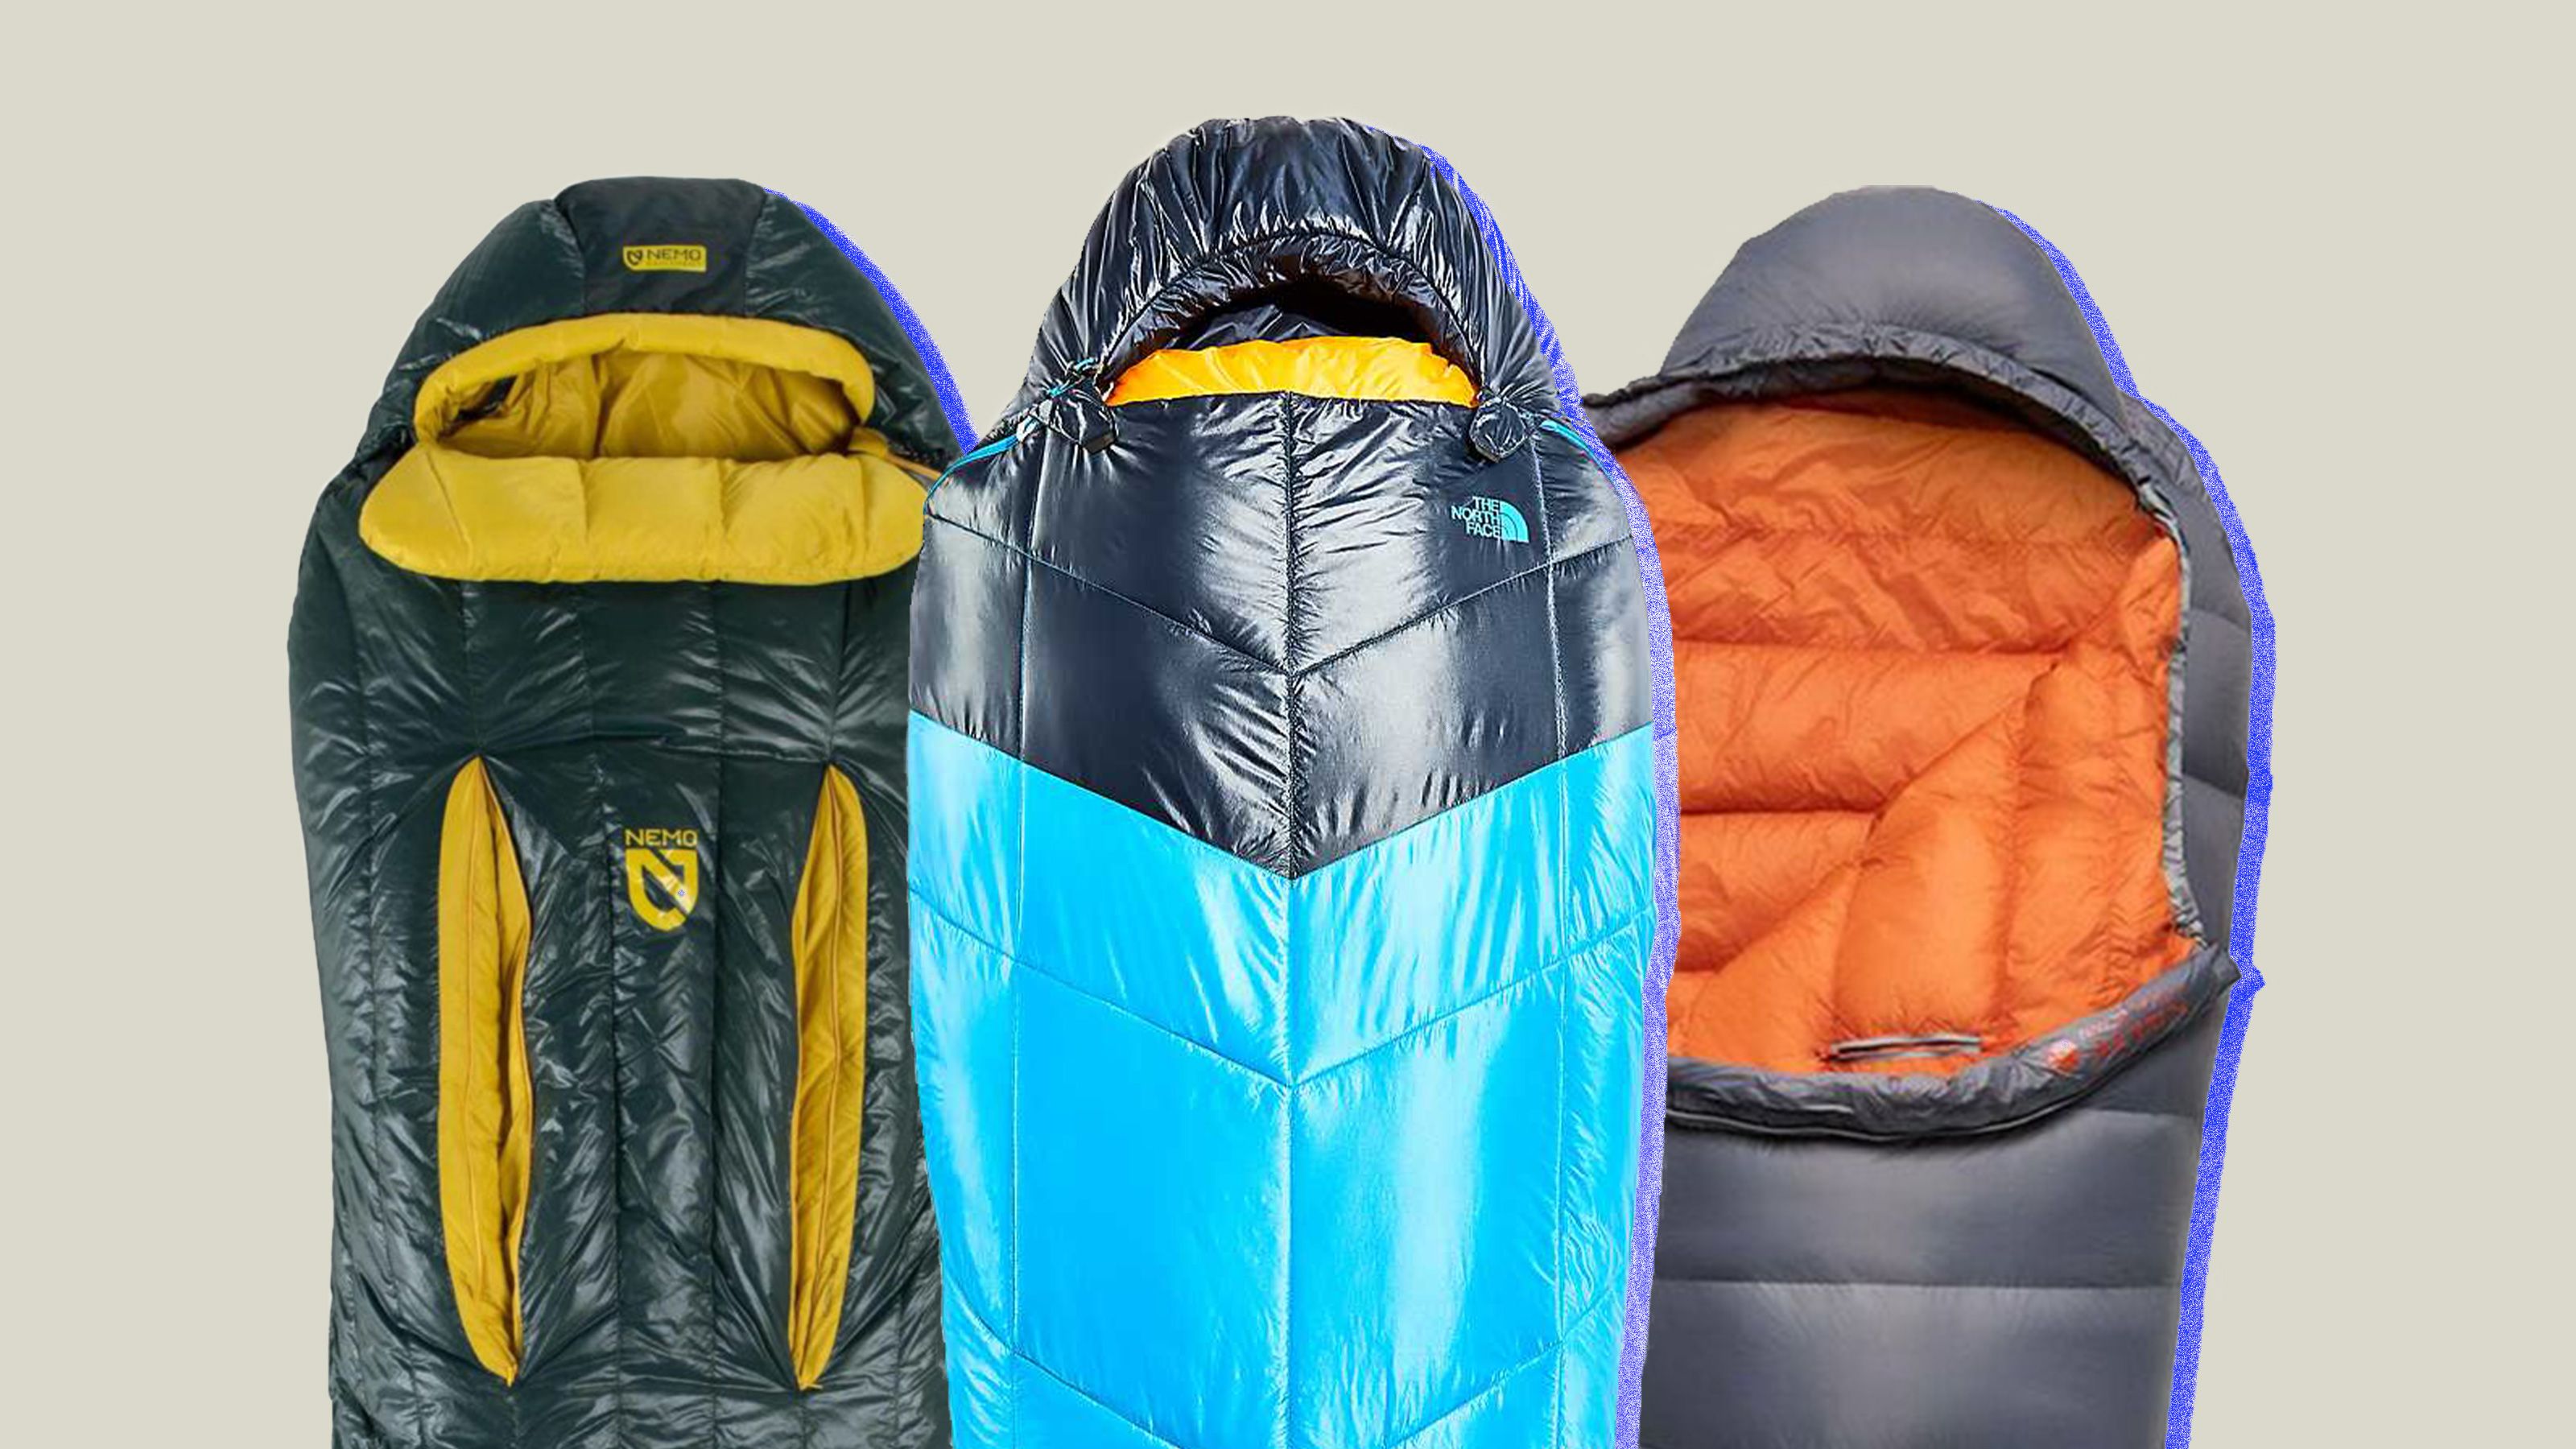 Costoffs Single Sleeping Bag for Adult 3 Seasons Camping Envelope Sleeping Bag Rectangular Sleeping Bags With Zipper Carry Bag 